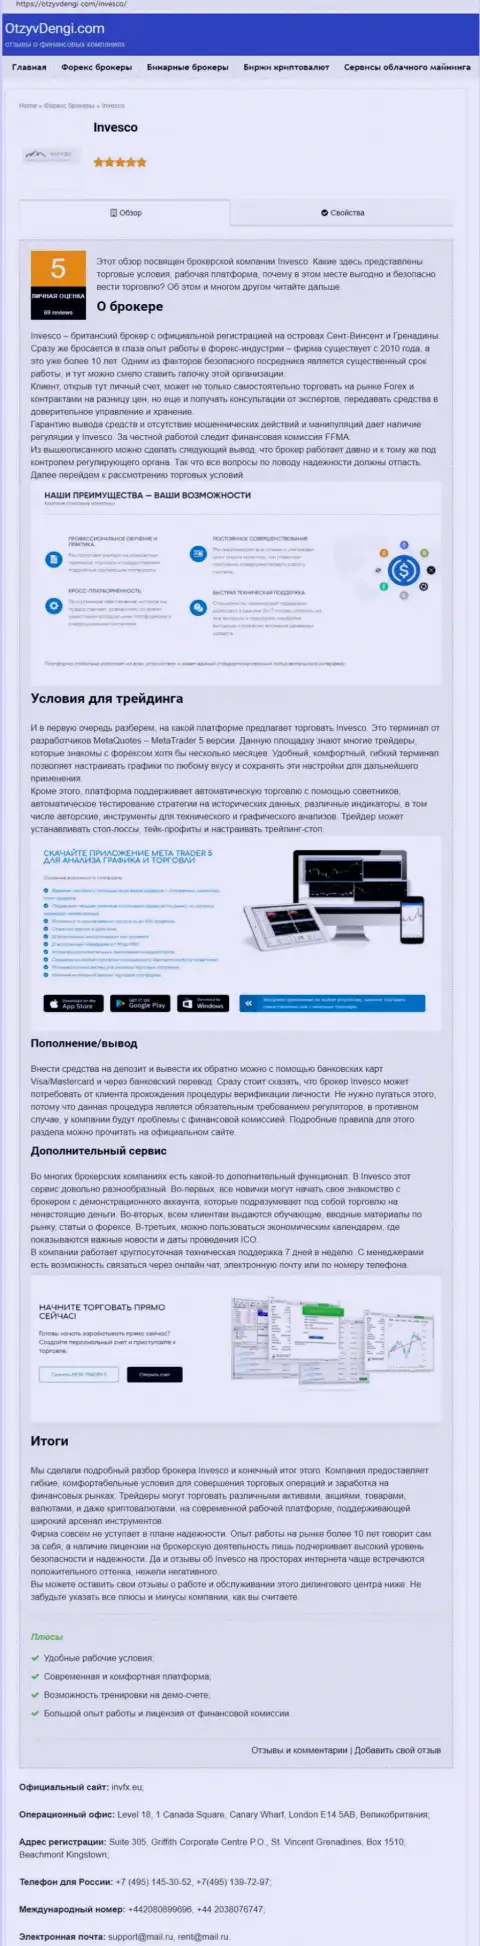 Web-ресурс otzyvdengi com представил материал о ФОРЕКС компании ИНВФХ